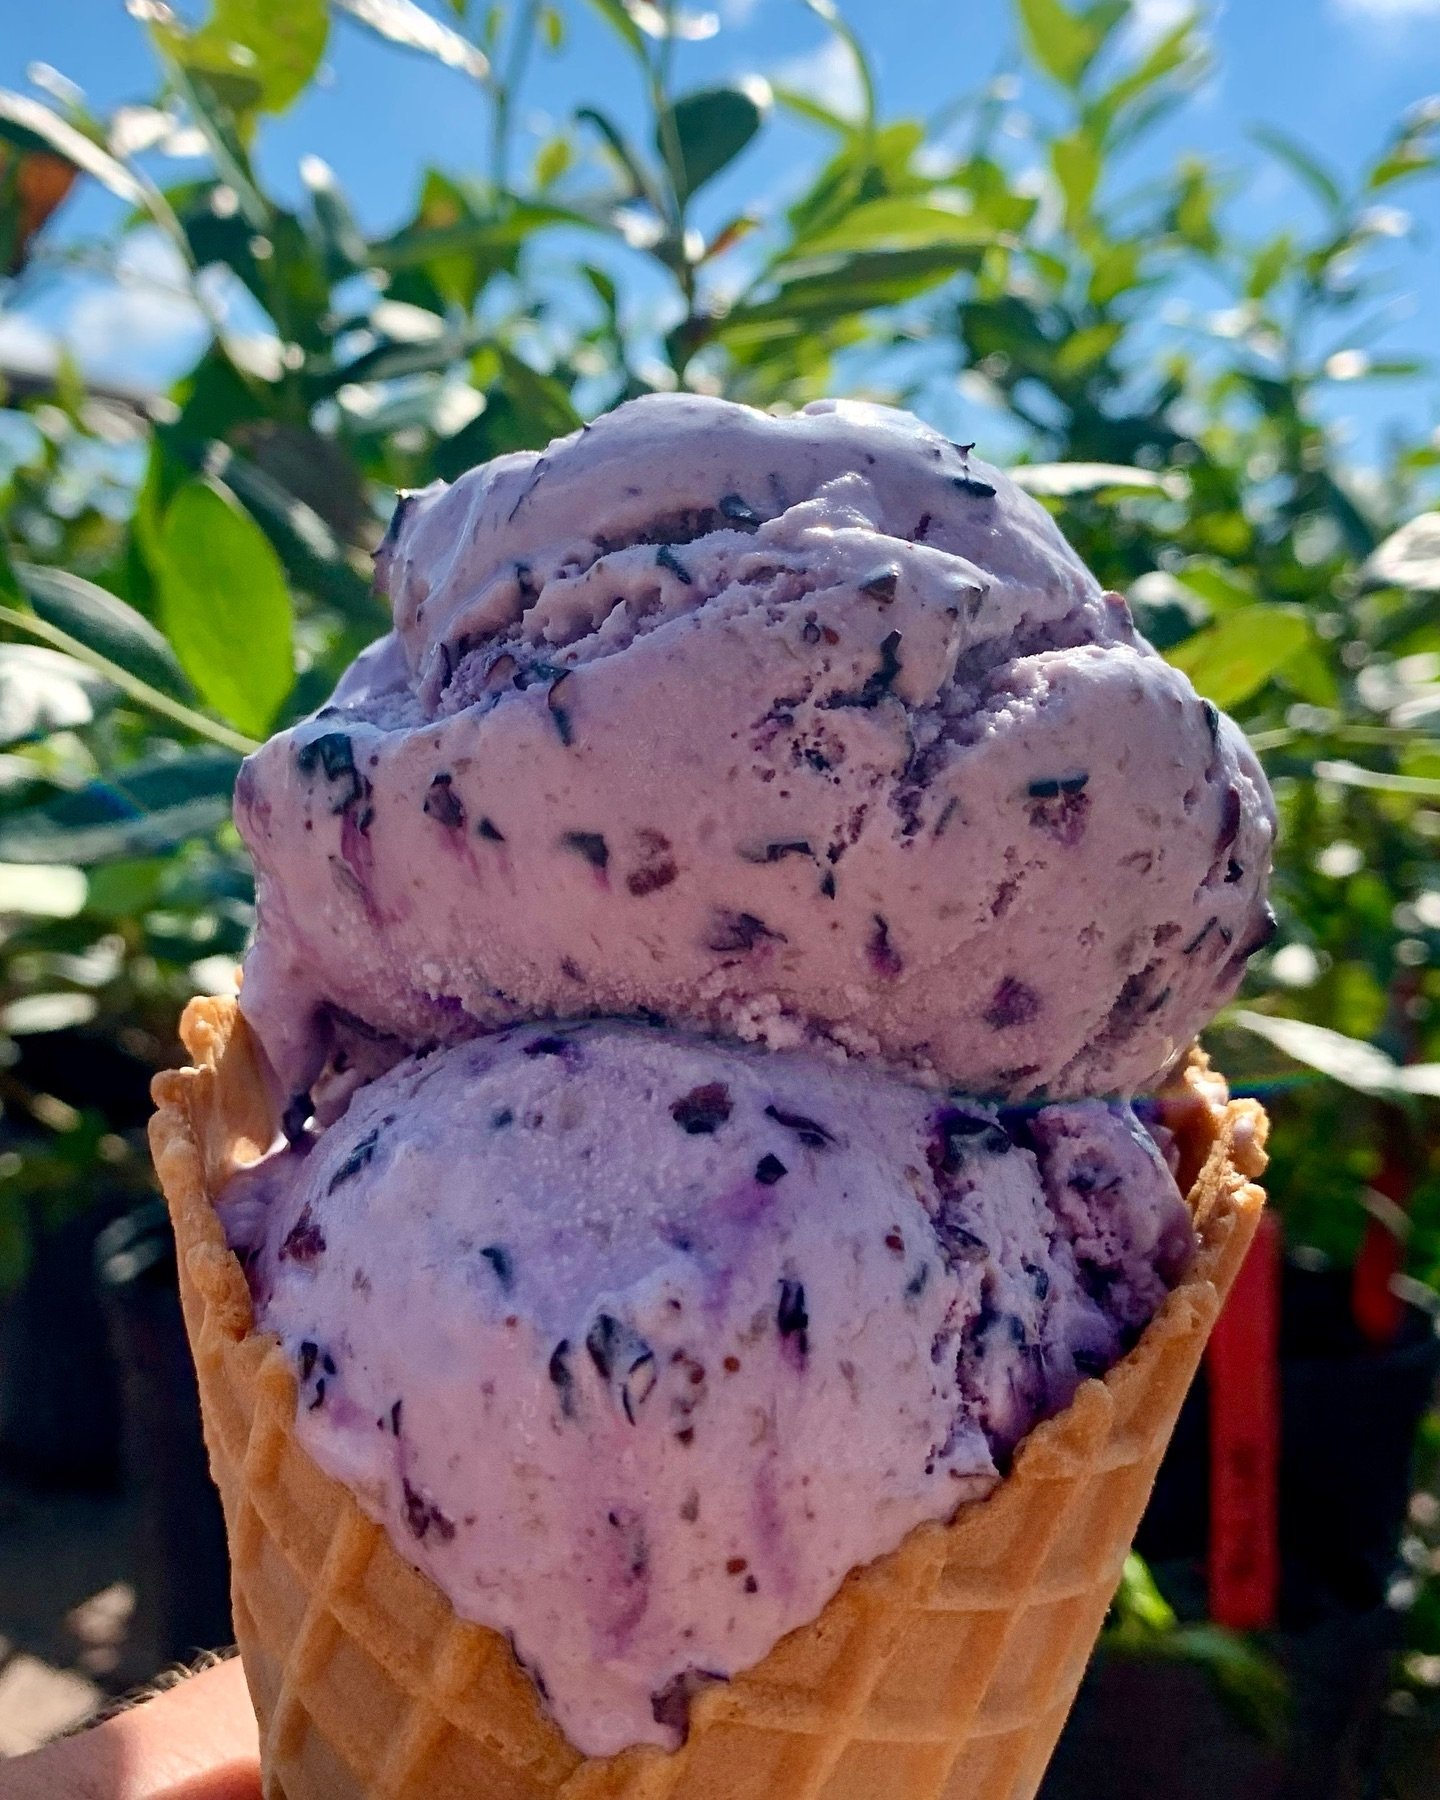 Now serving blueberry ice cream!! 🫐🍦